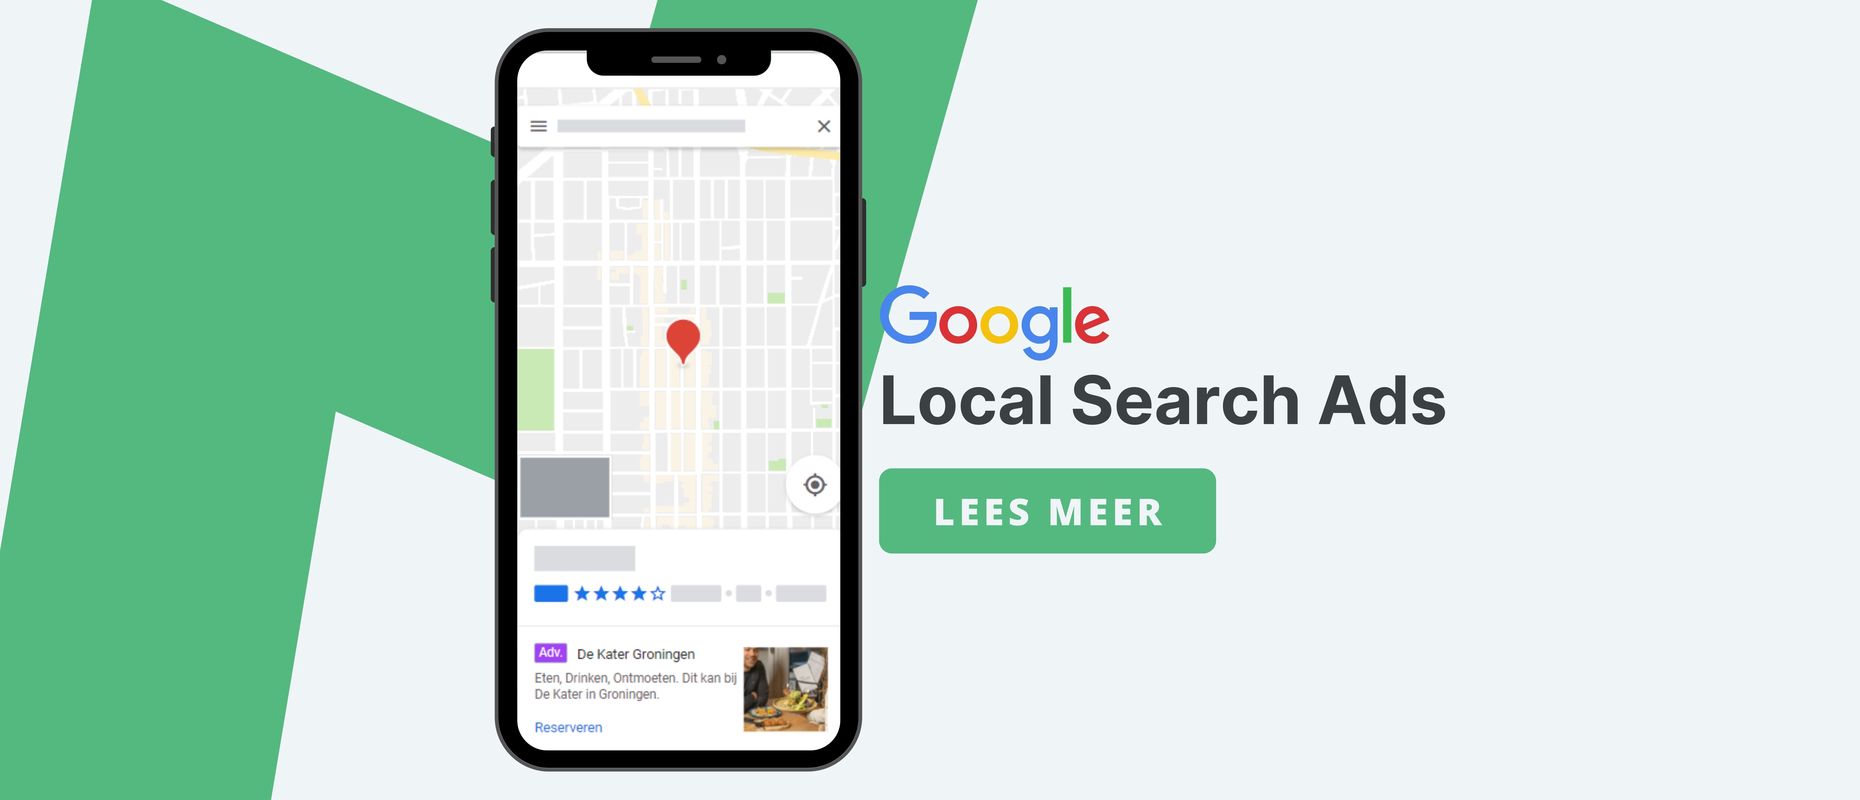 Local Search Ads Google.jpg